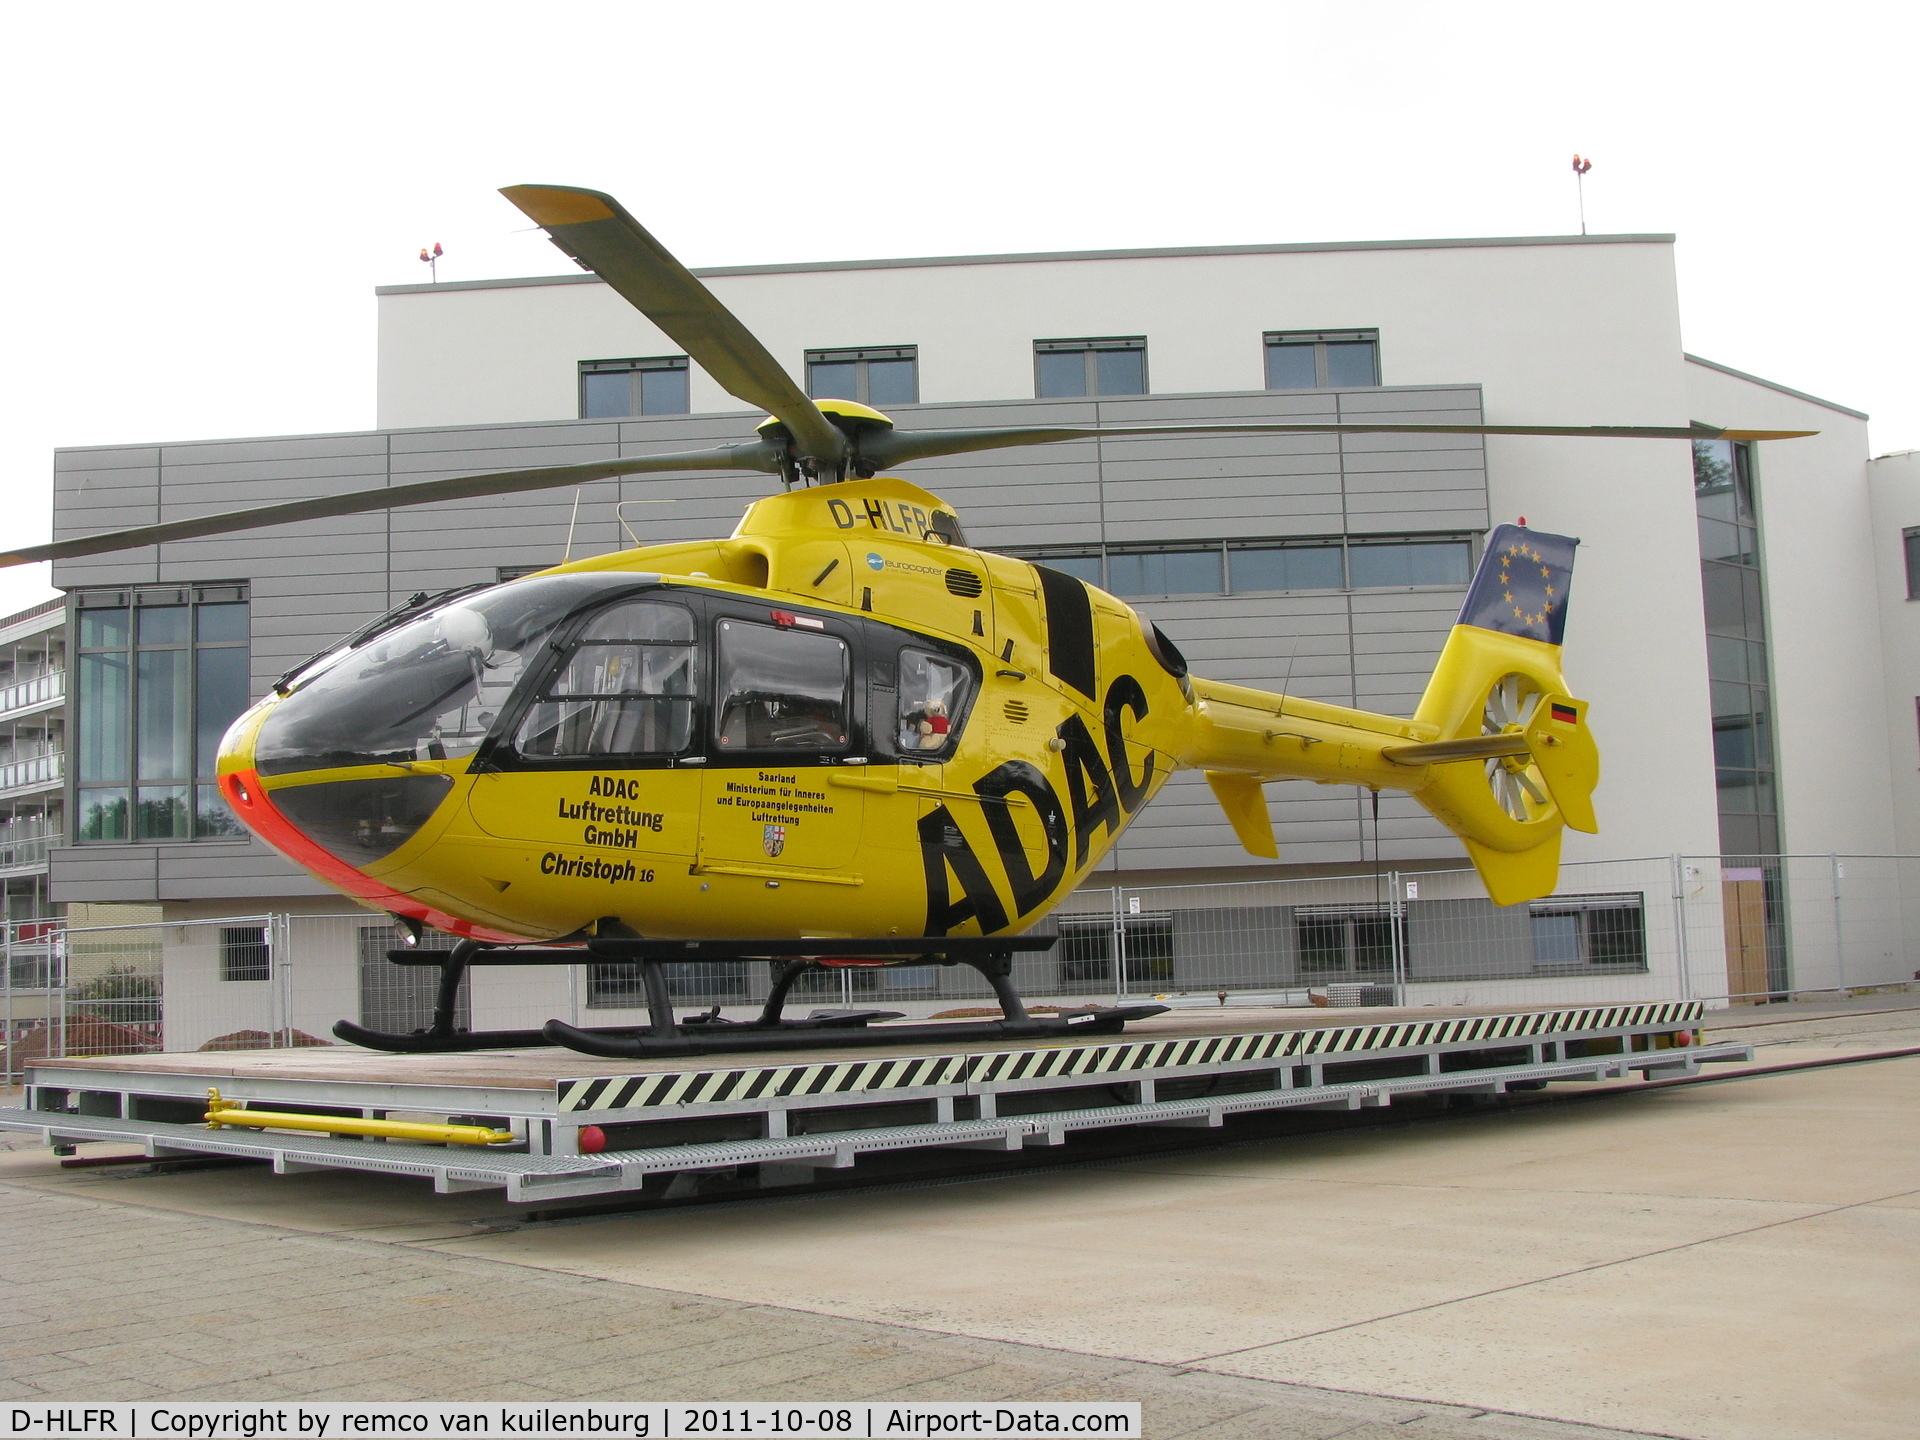 D-HLFR, 2005 Eurocopter EC-135P-2 C/N 0447, Christoph 16, Saarbrucken Hospital